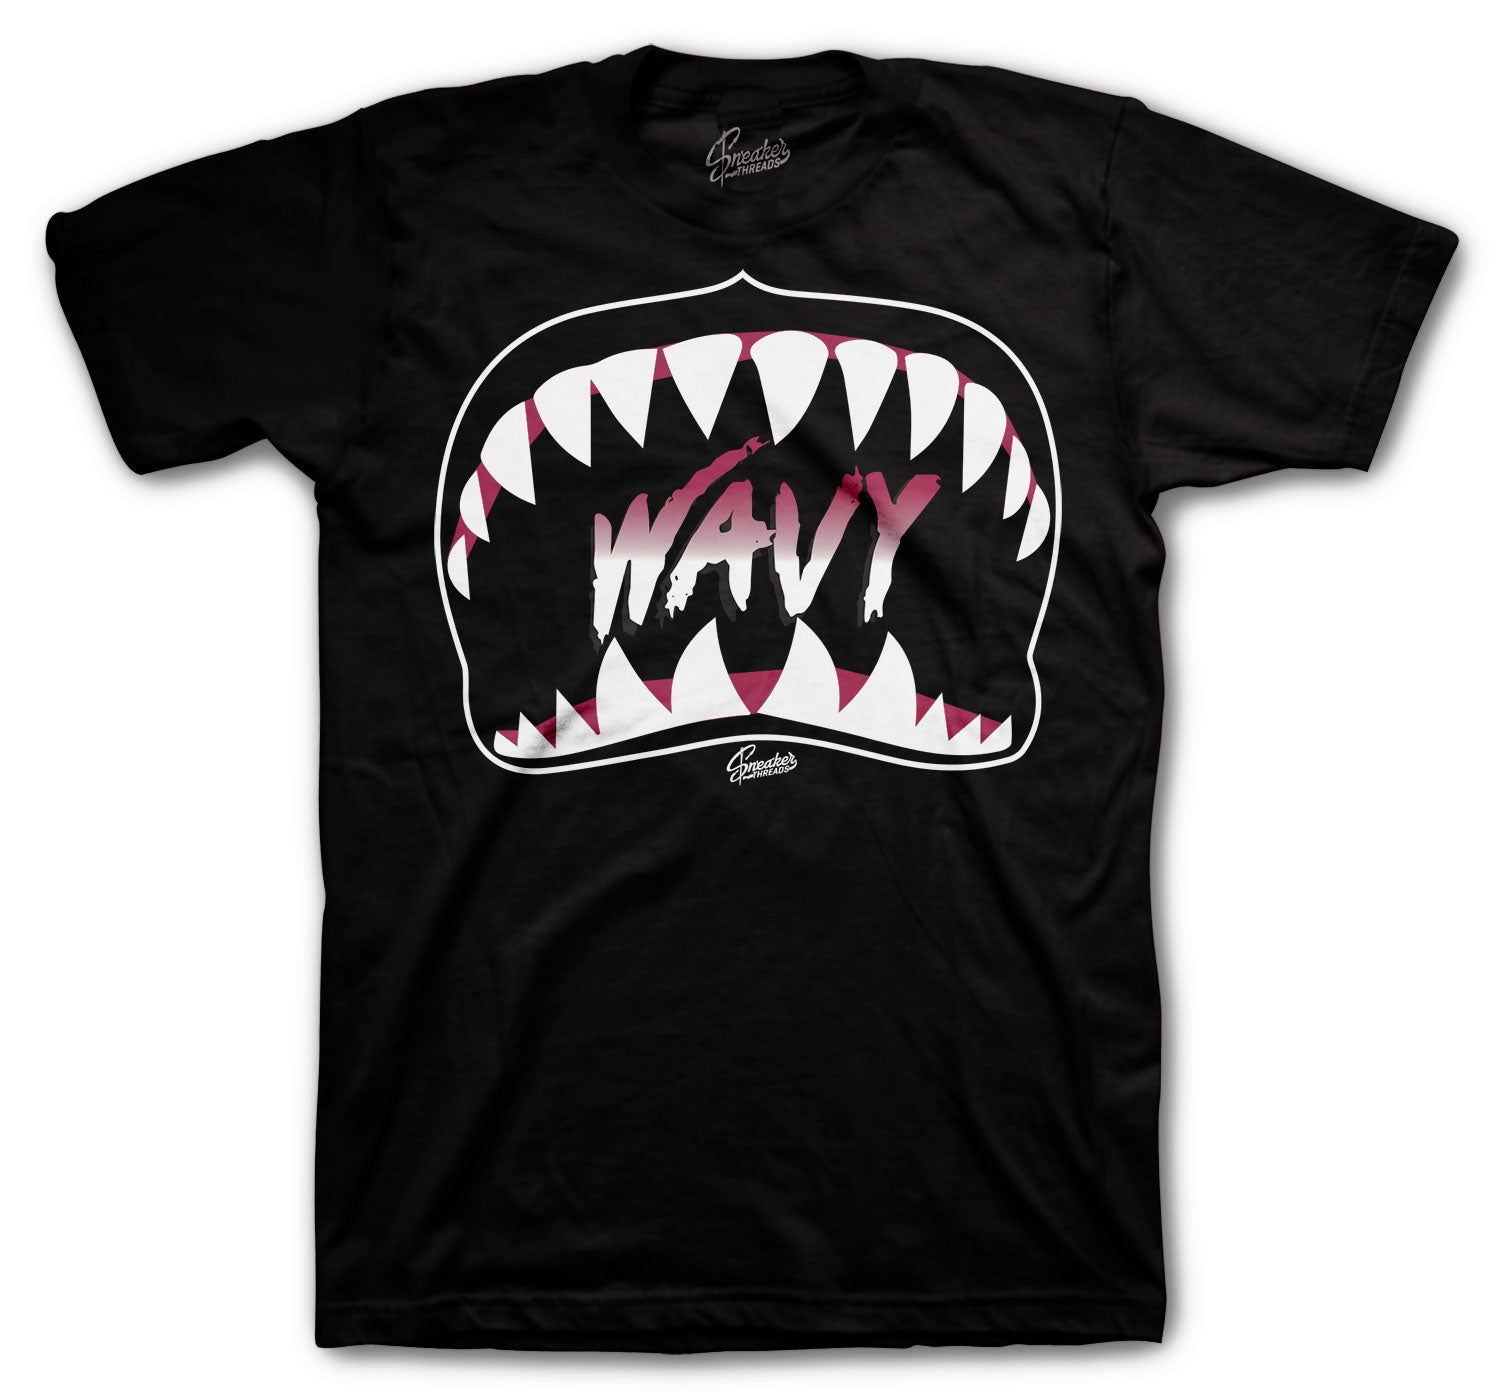 Retro 4 PSG Shirt - Wavy - Black